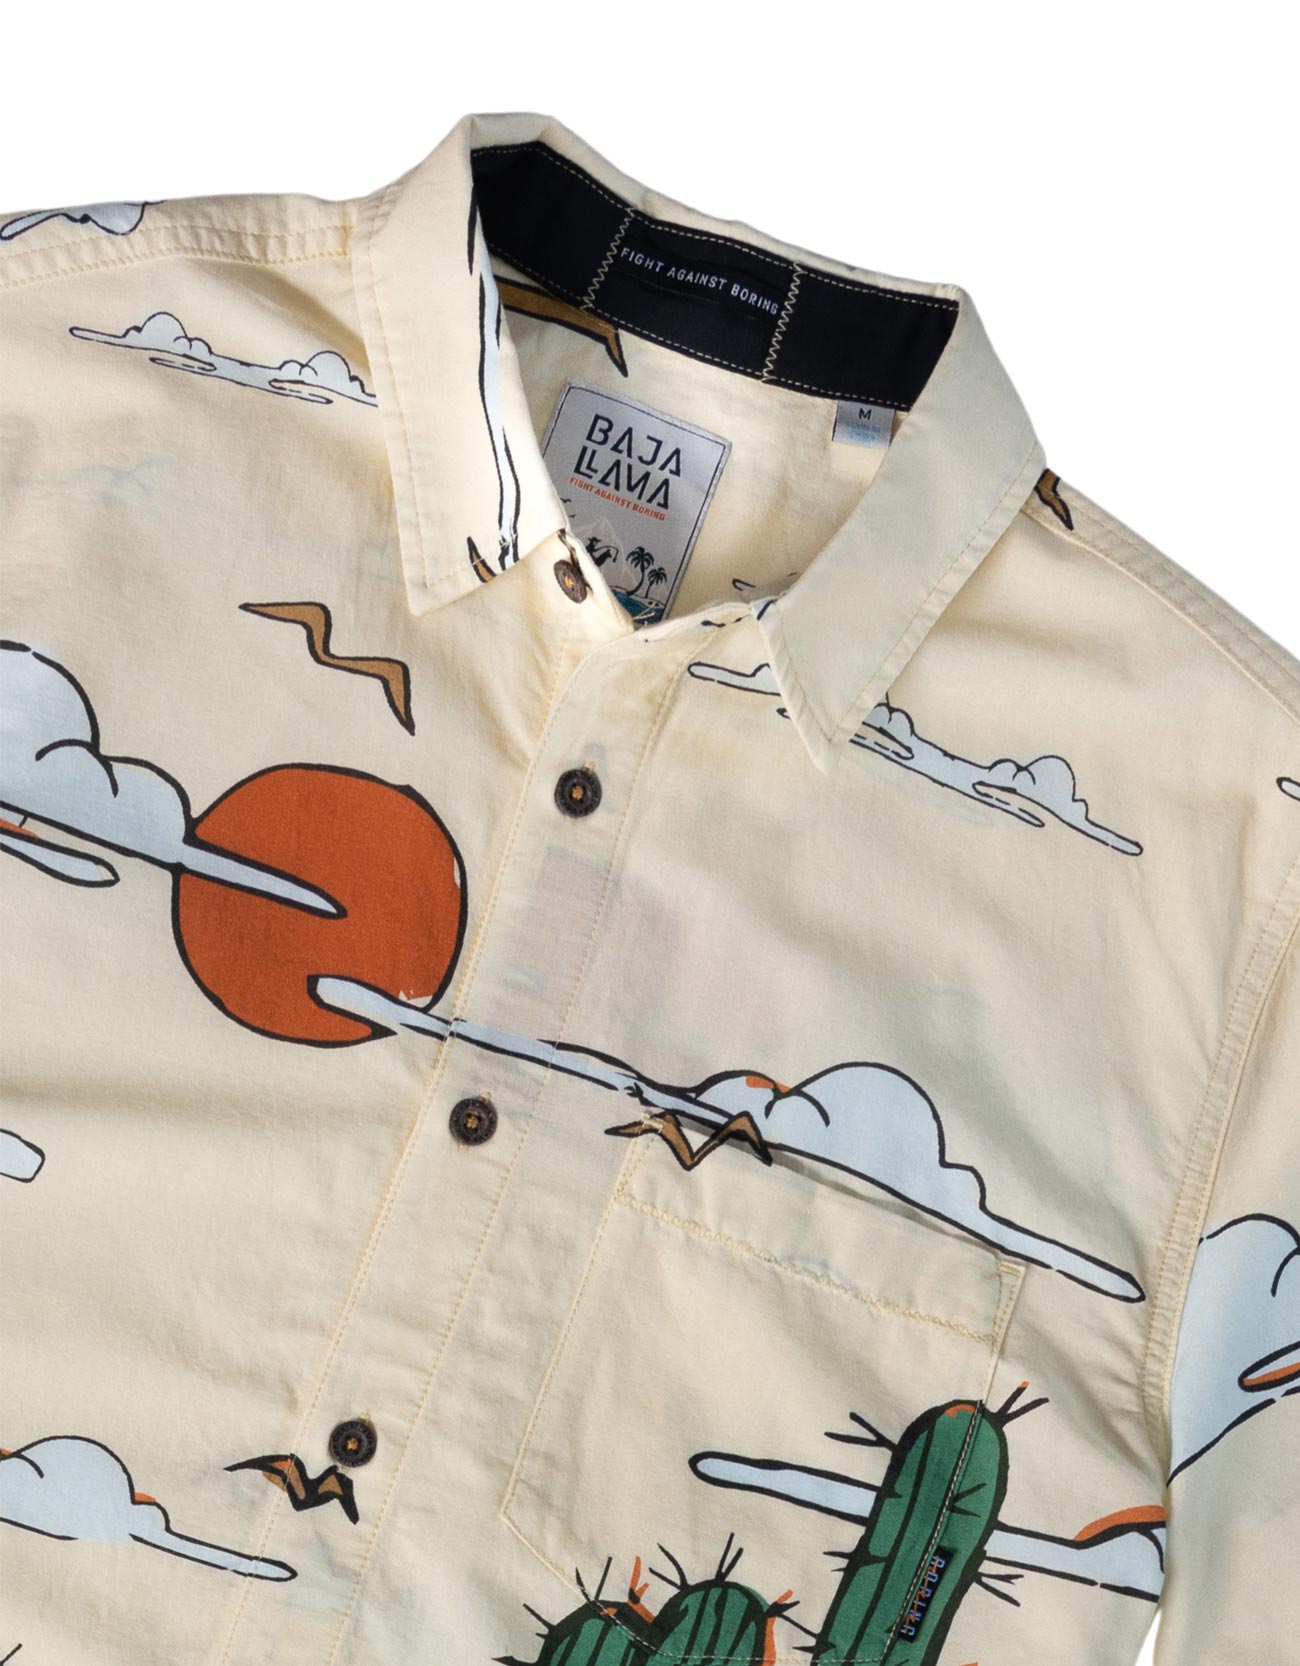 Cream short sleeve button up shirt featuring desert landscape and cactus print